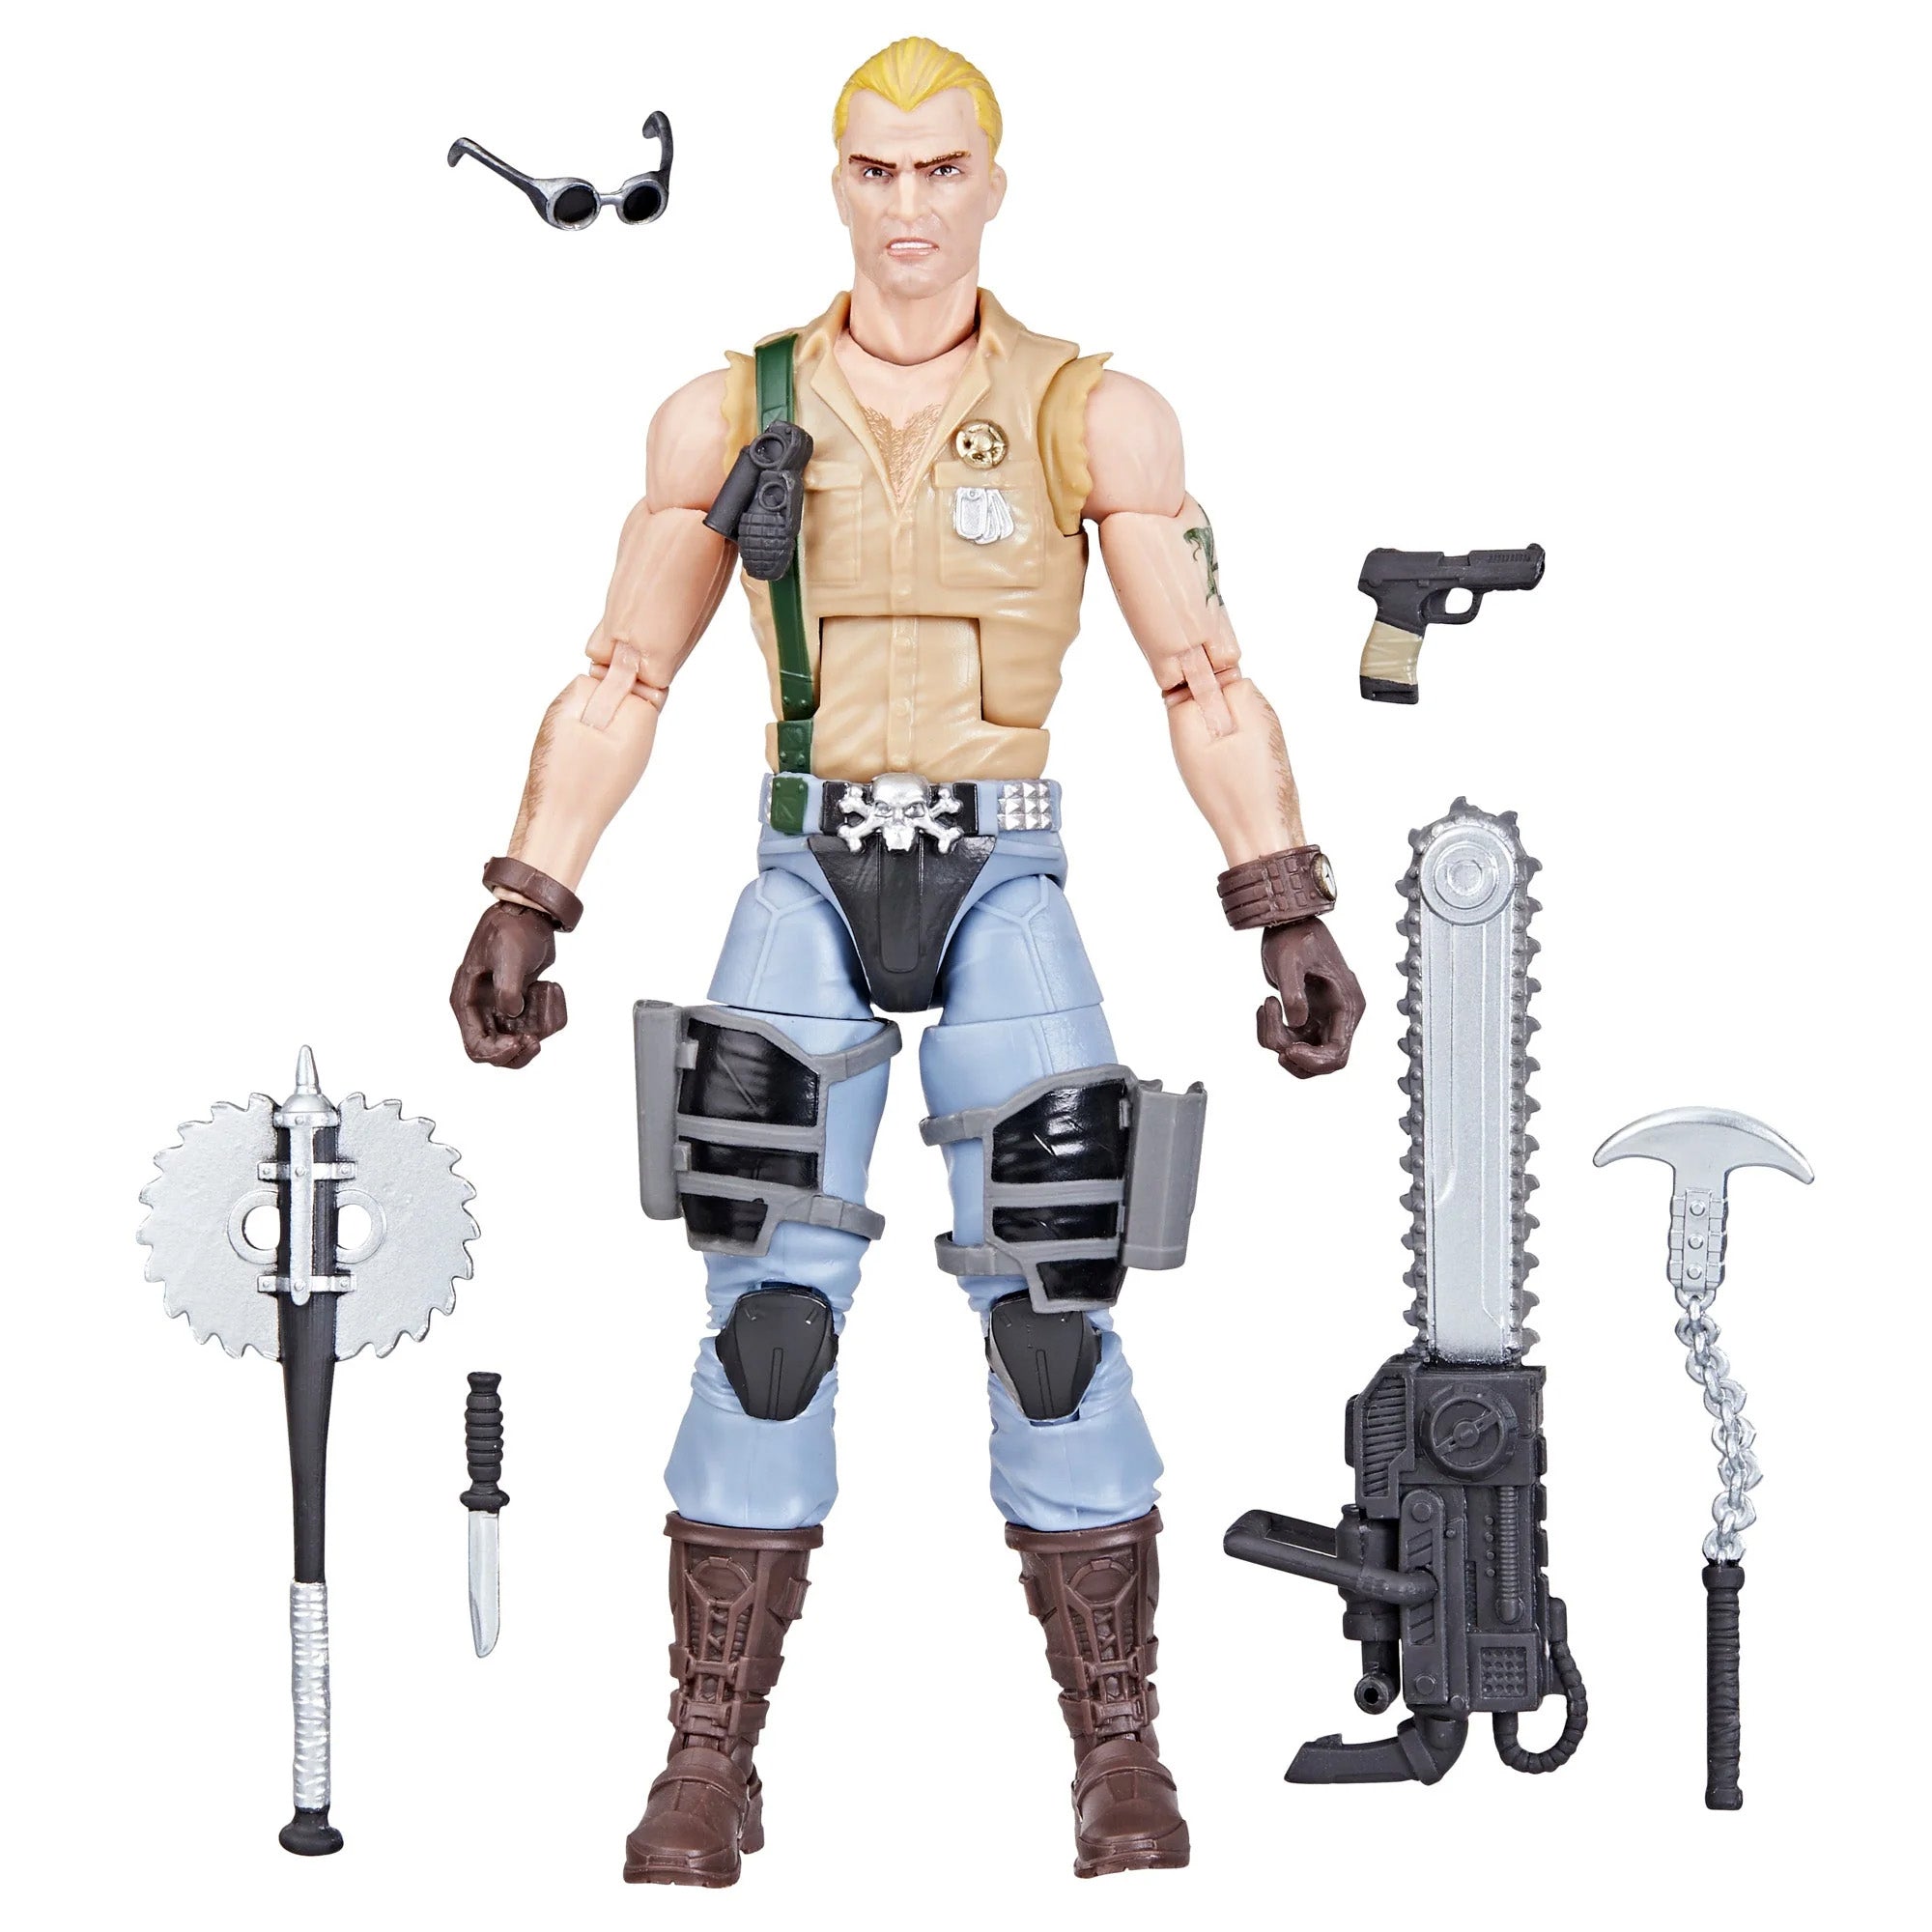 Hasbro - G.I. Joe Classified Series - Cobra Dreadnok Buzzer (6&quot;) - Marvelous Toys